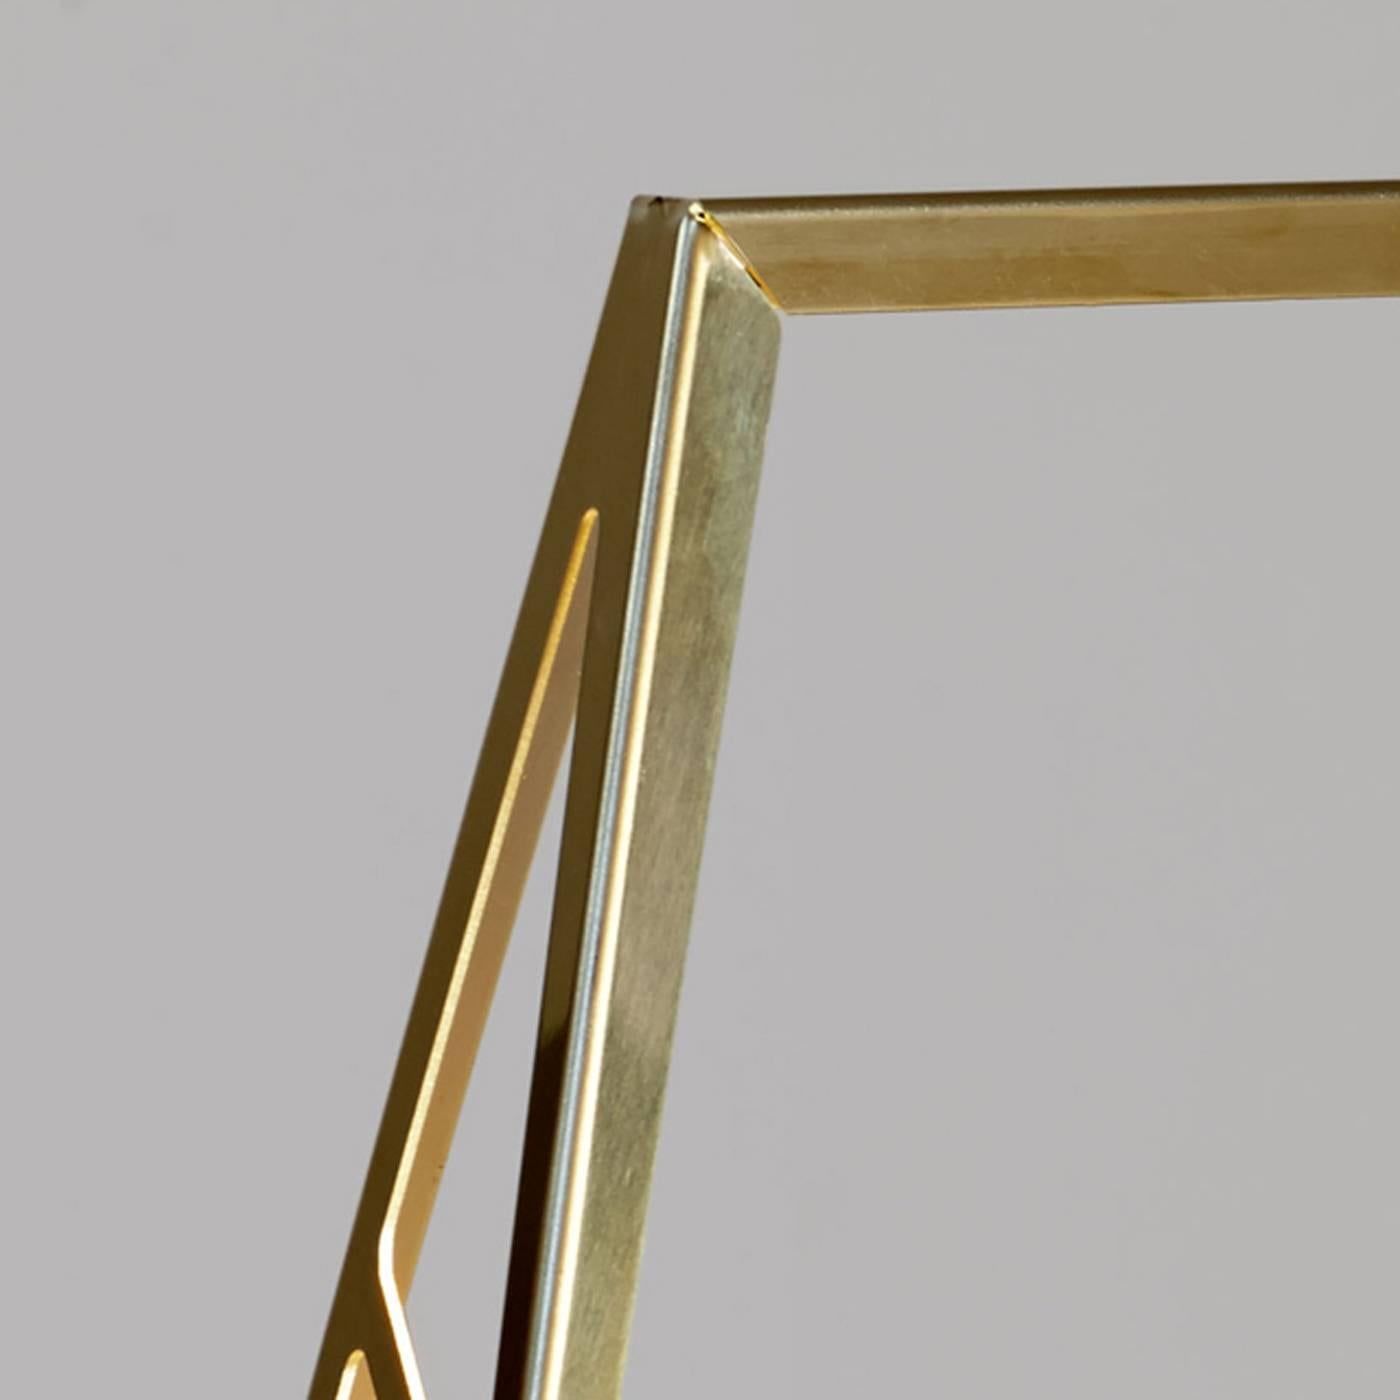 Other Elegant and Stylish Small 'Bridge' Table Lamp